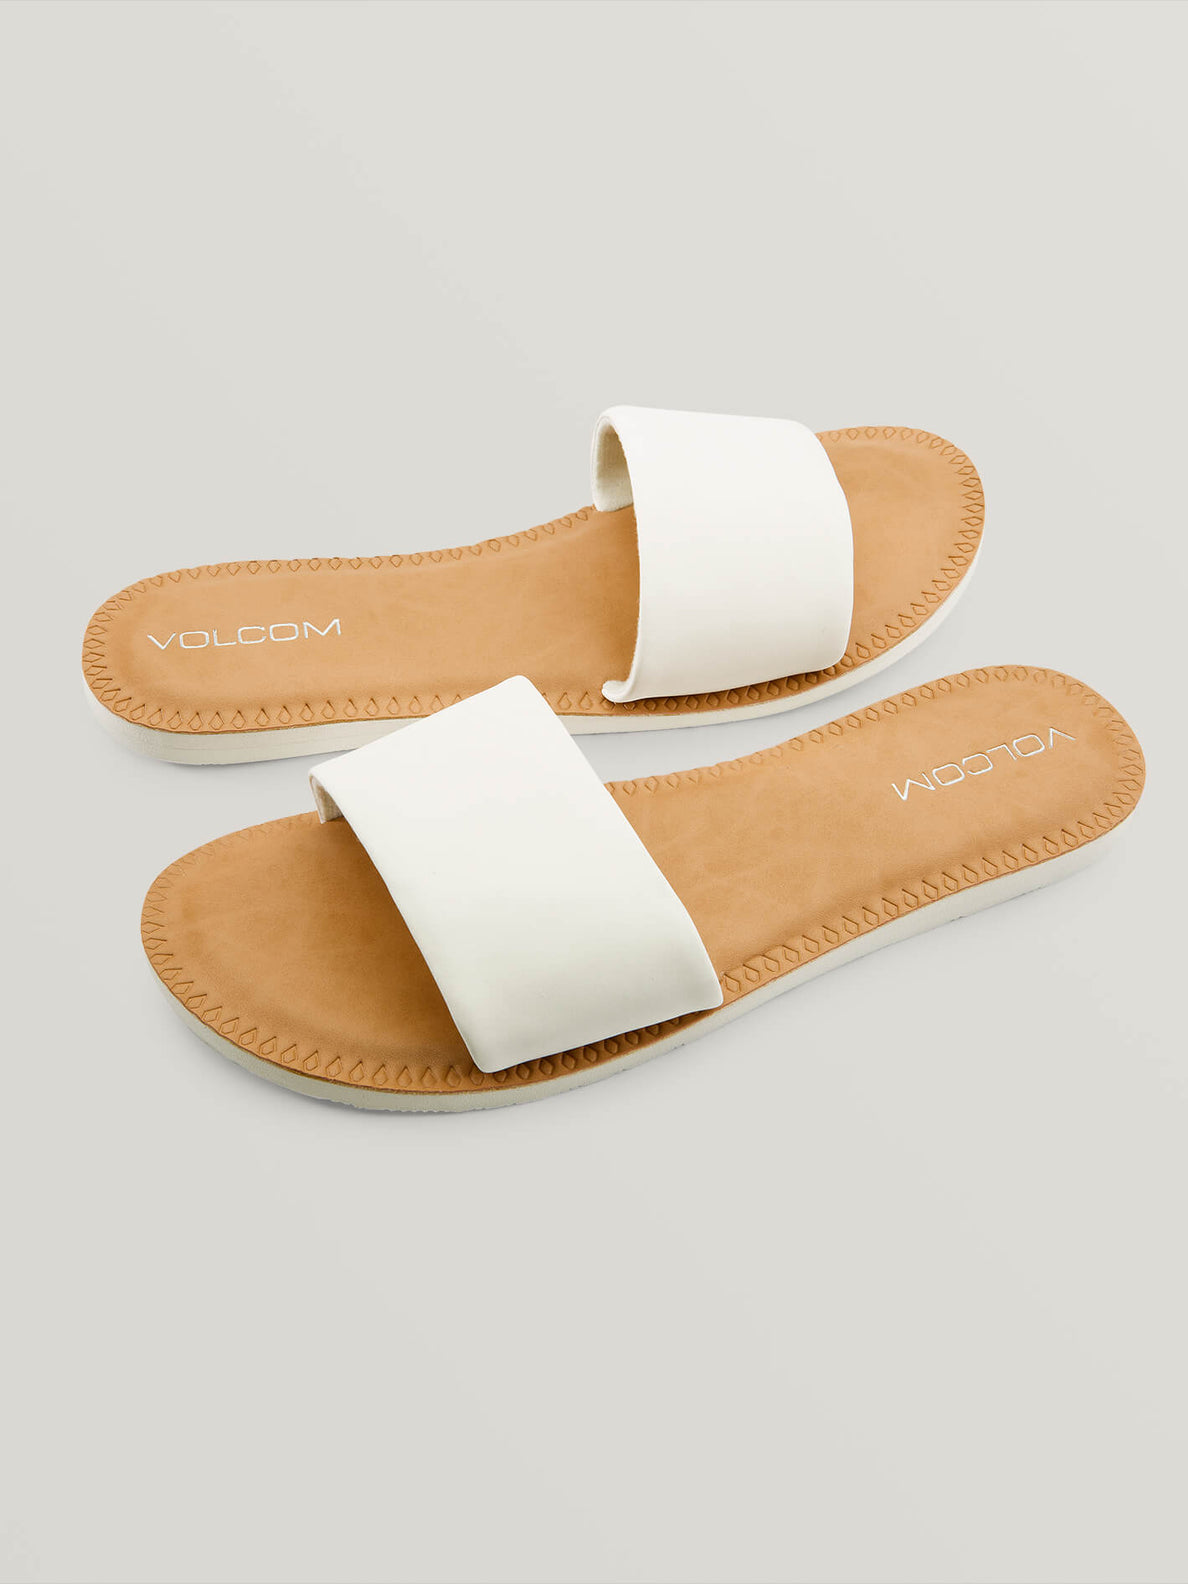 medifeet sandals for ladies